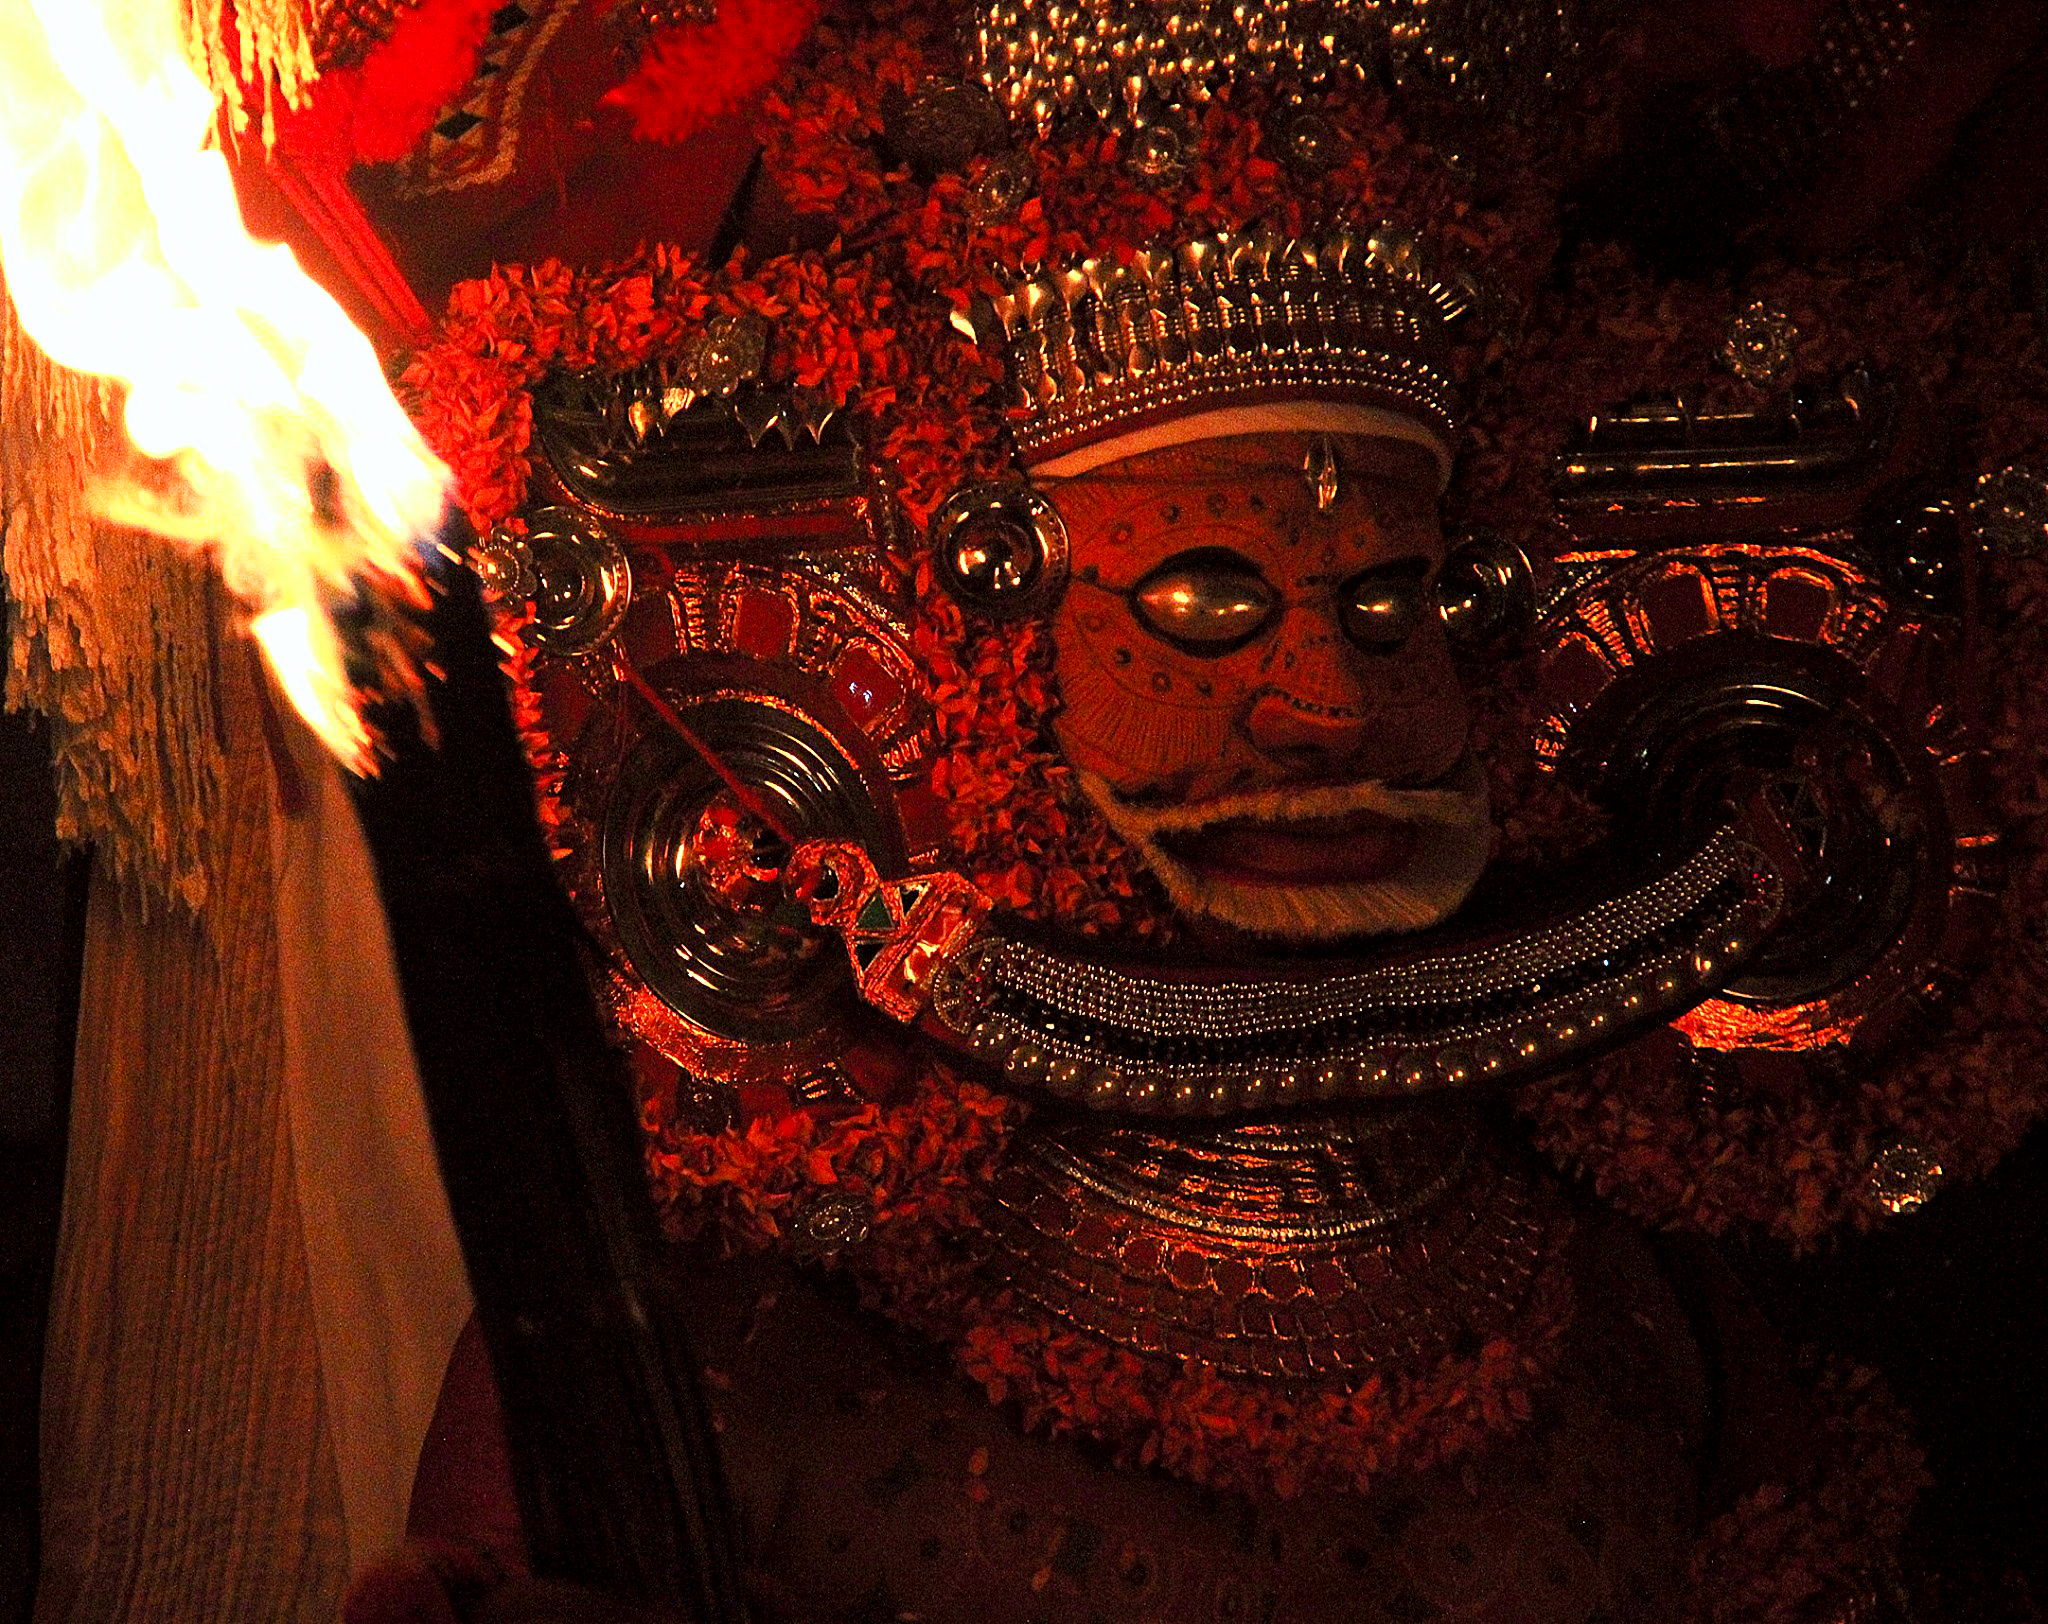 The deity theyyam performer